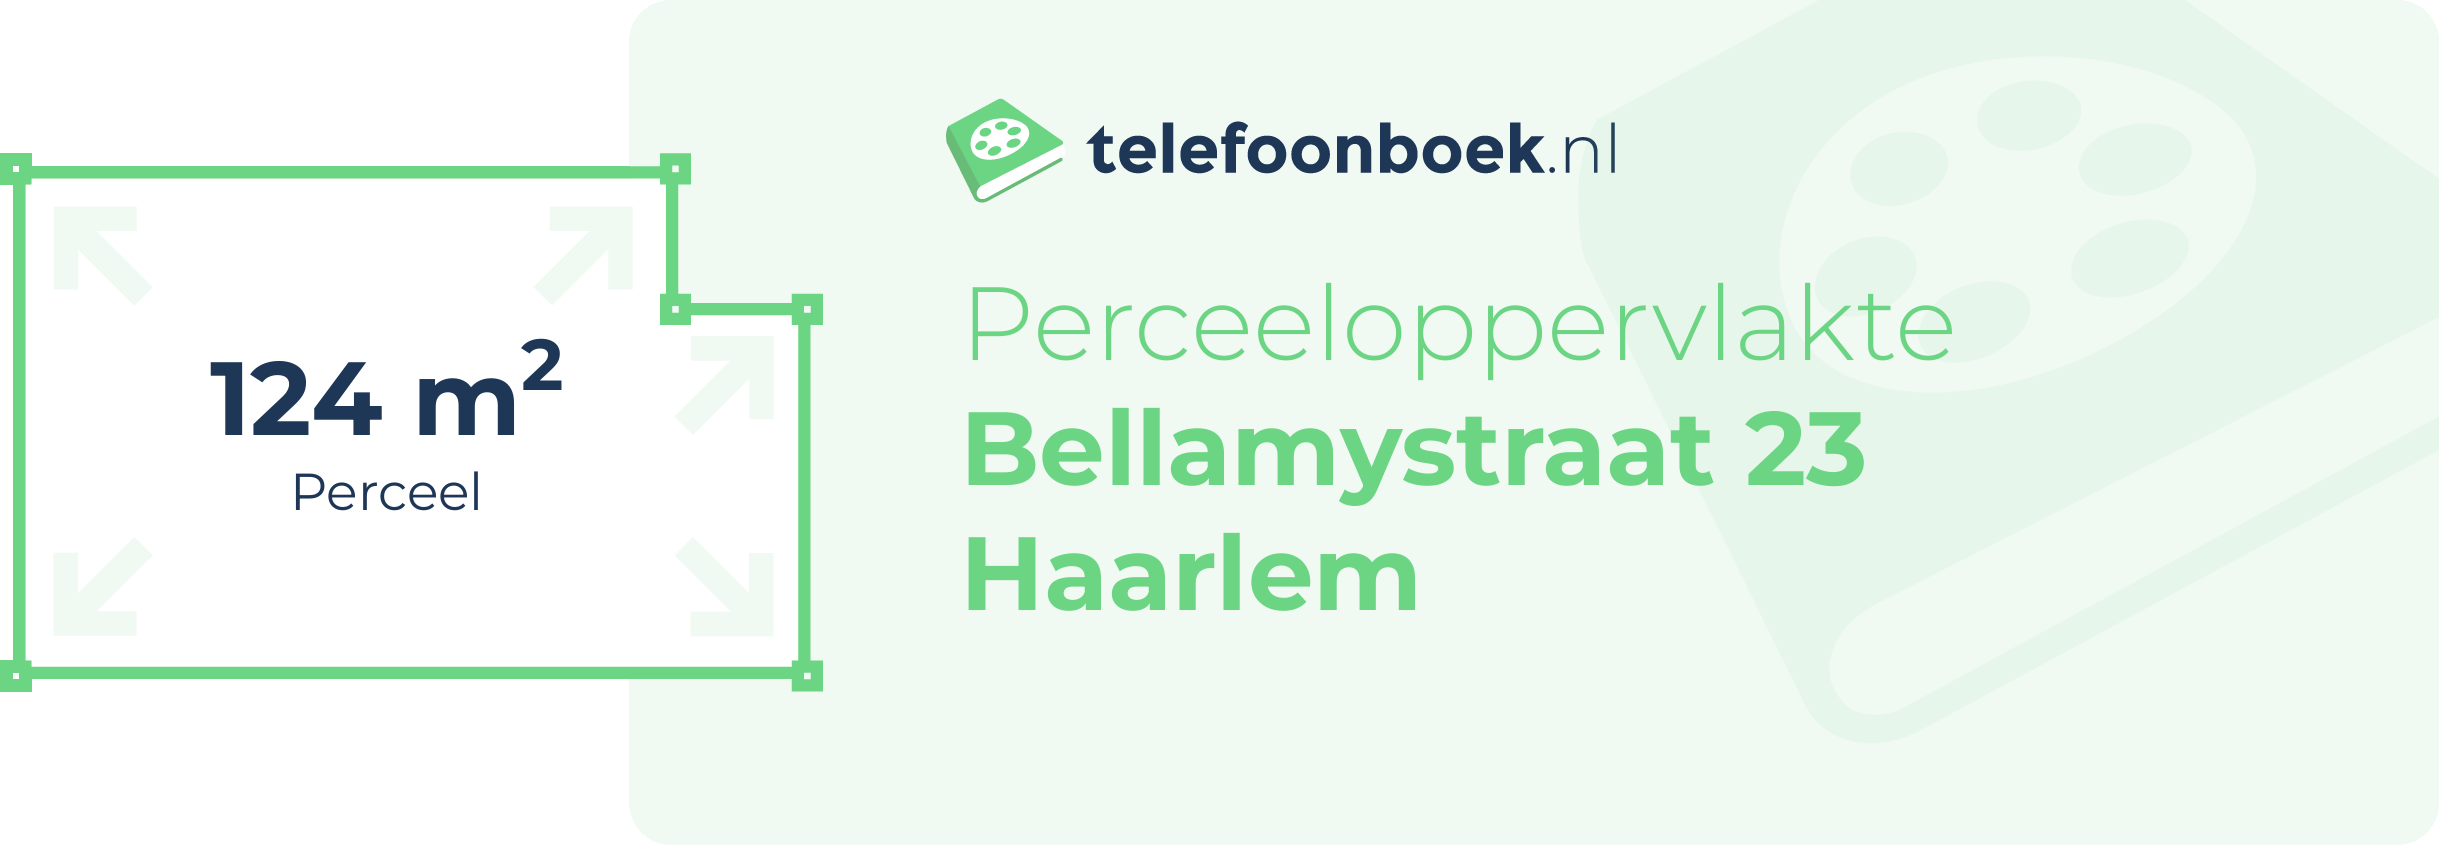 Perceeloppervlakte Bellamystraat 23 Haarlem